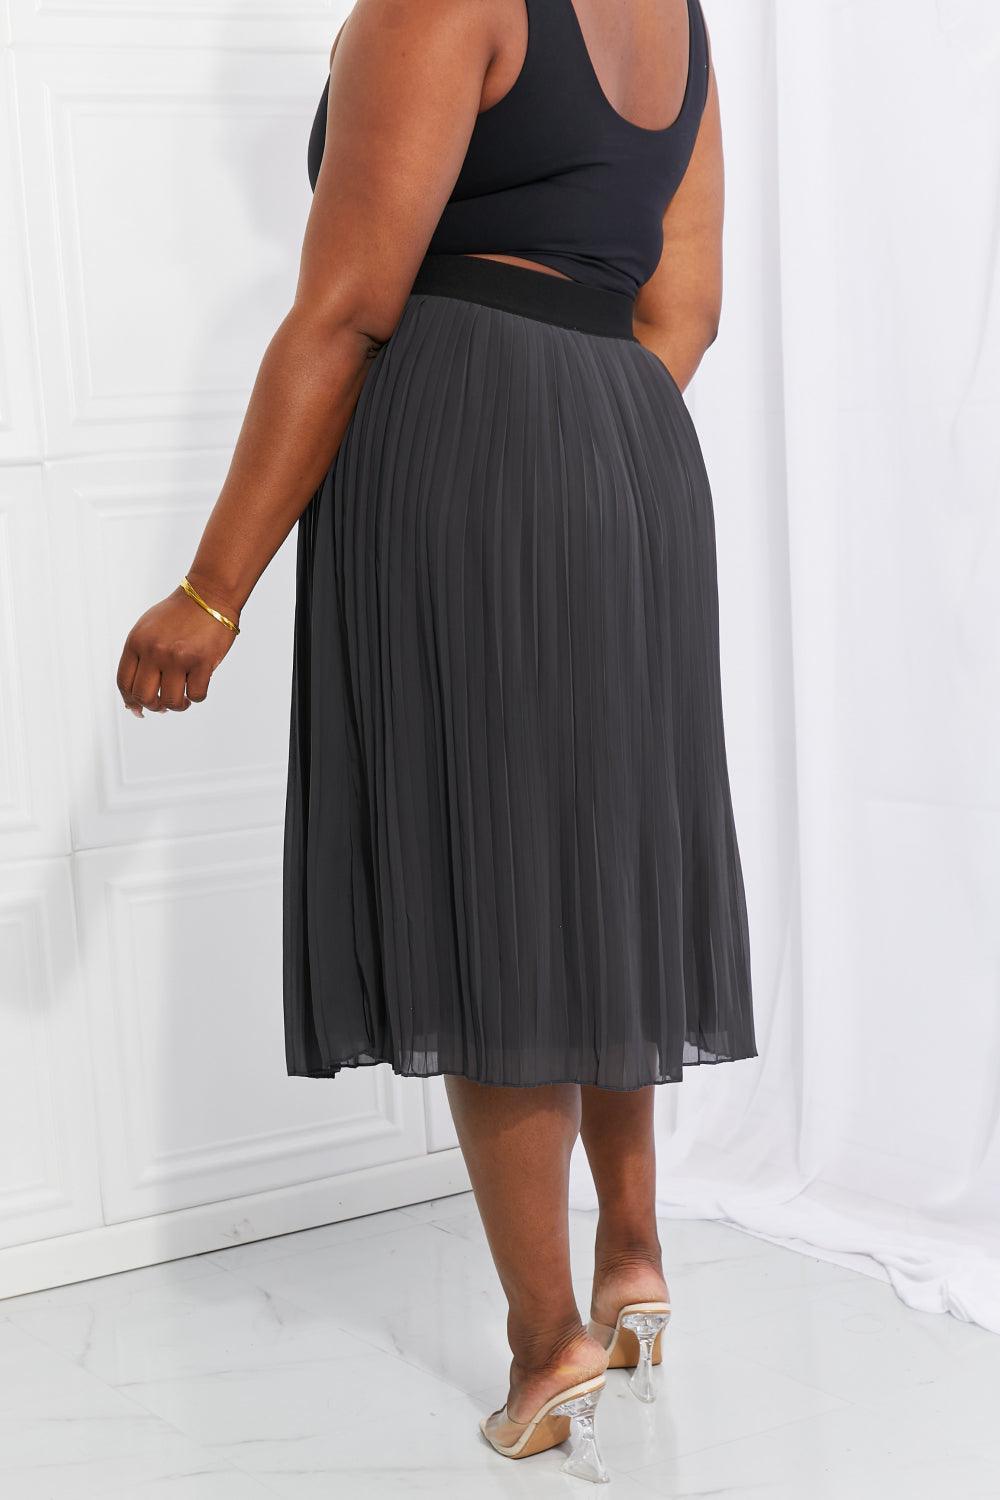 Sunday's Best Midi Gray Plus Size Chiffon Skirt - MXSTUDIO.COM